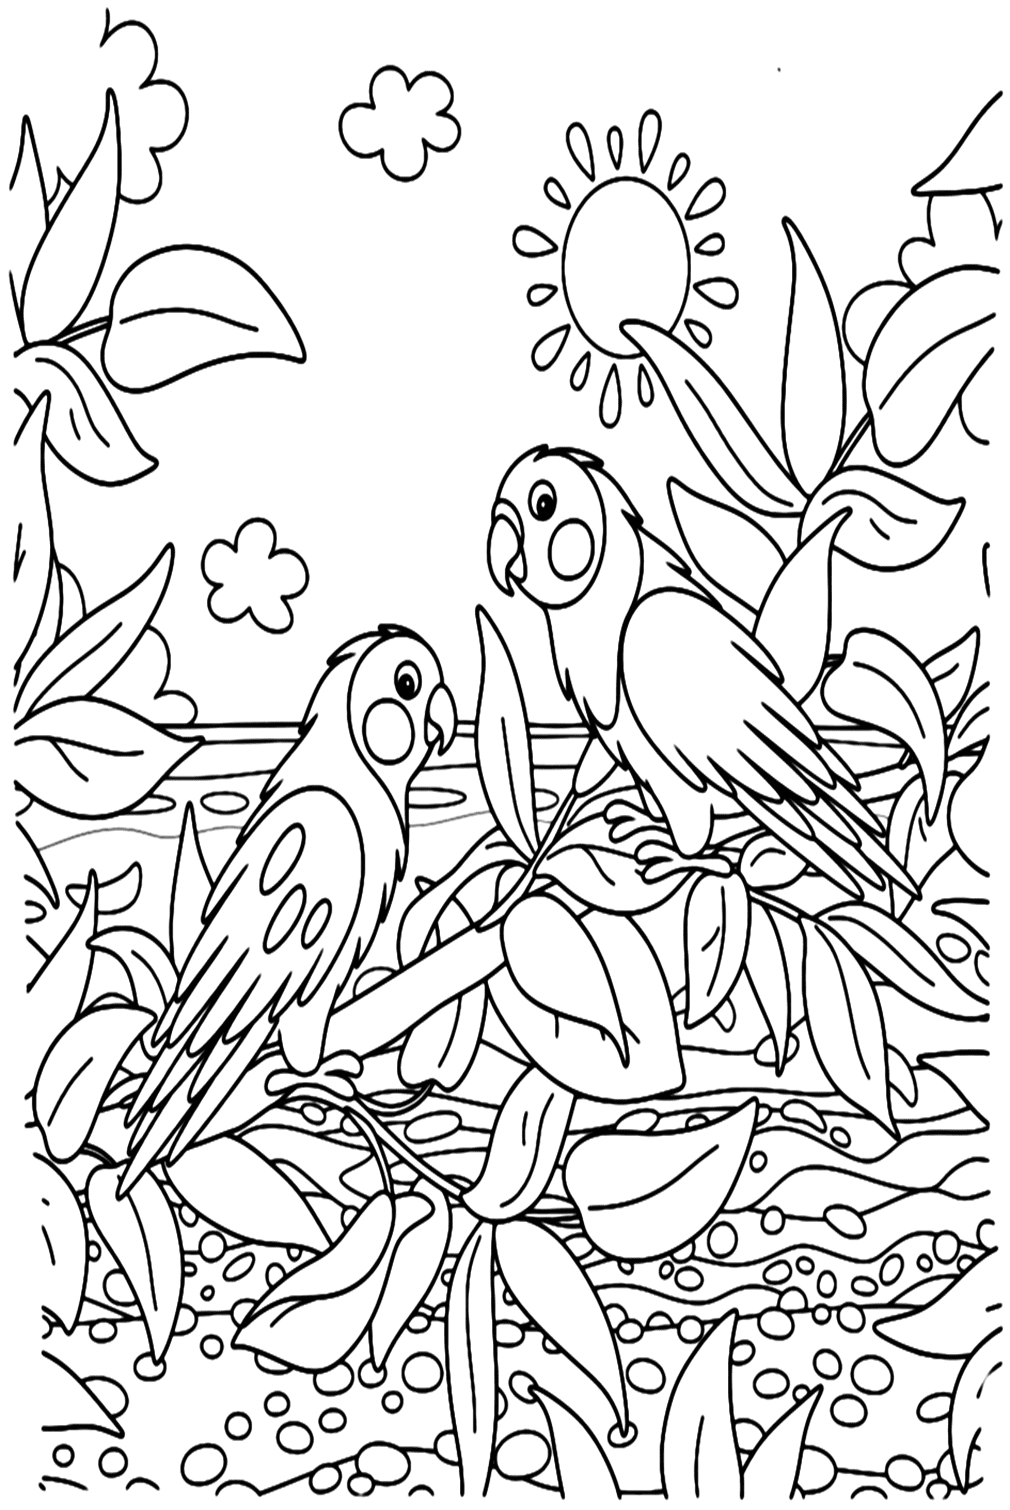 Divertida página para colorear de periquito de Parakeet